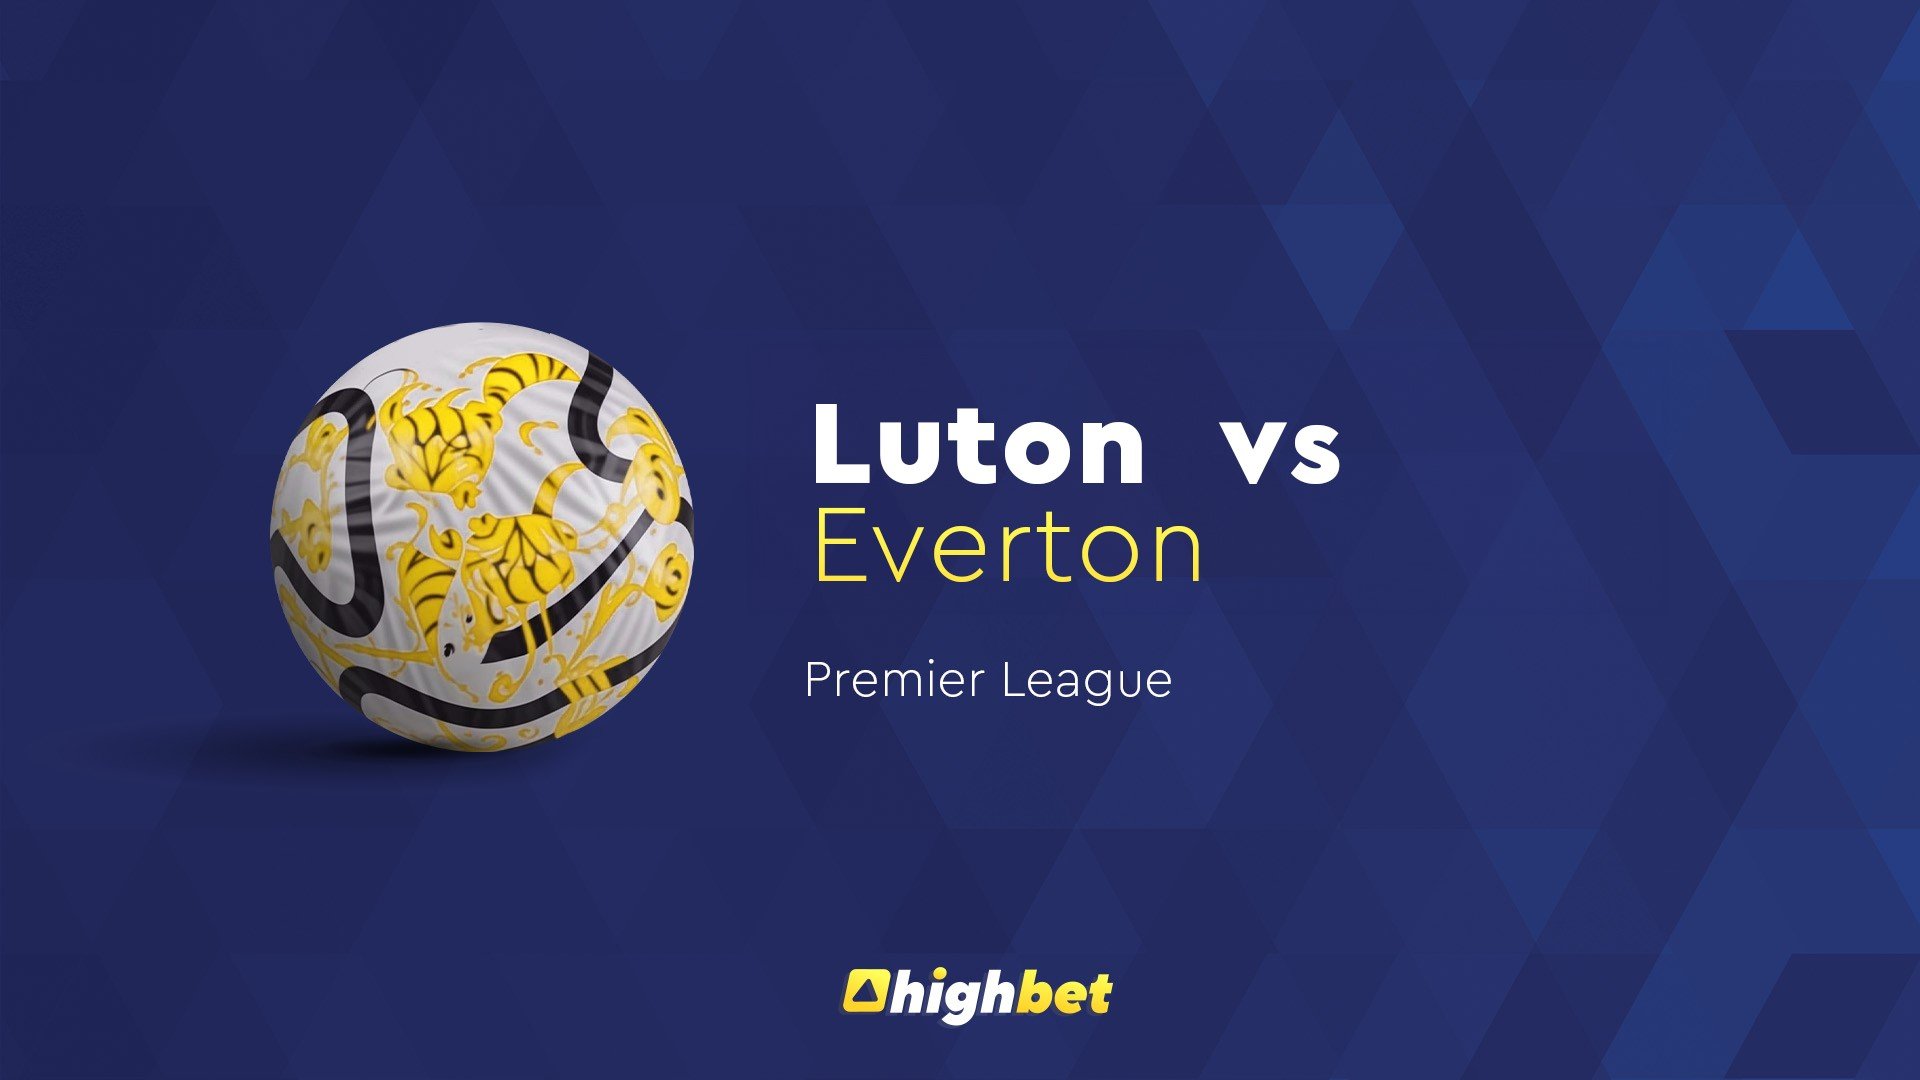 Luton vs Everton - Highbet Preview - Premier League Prediction